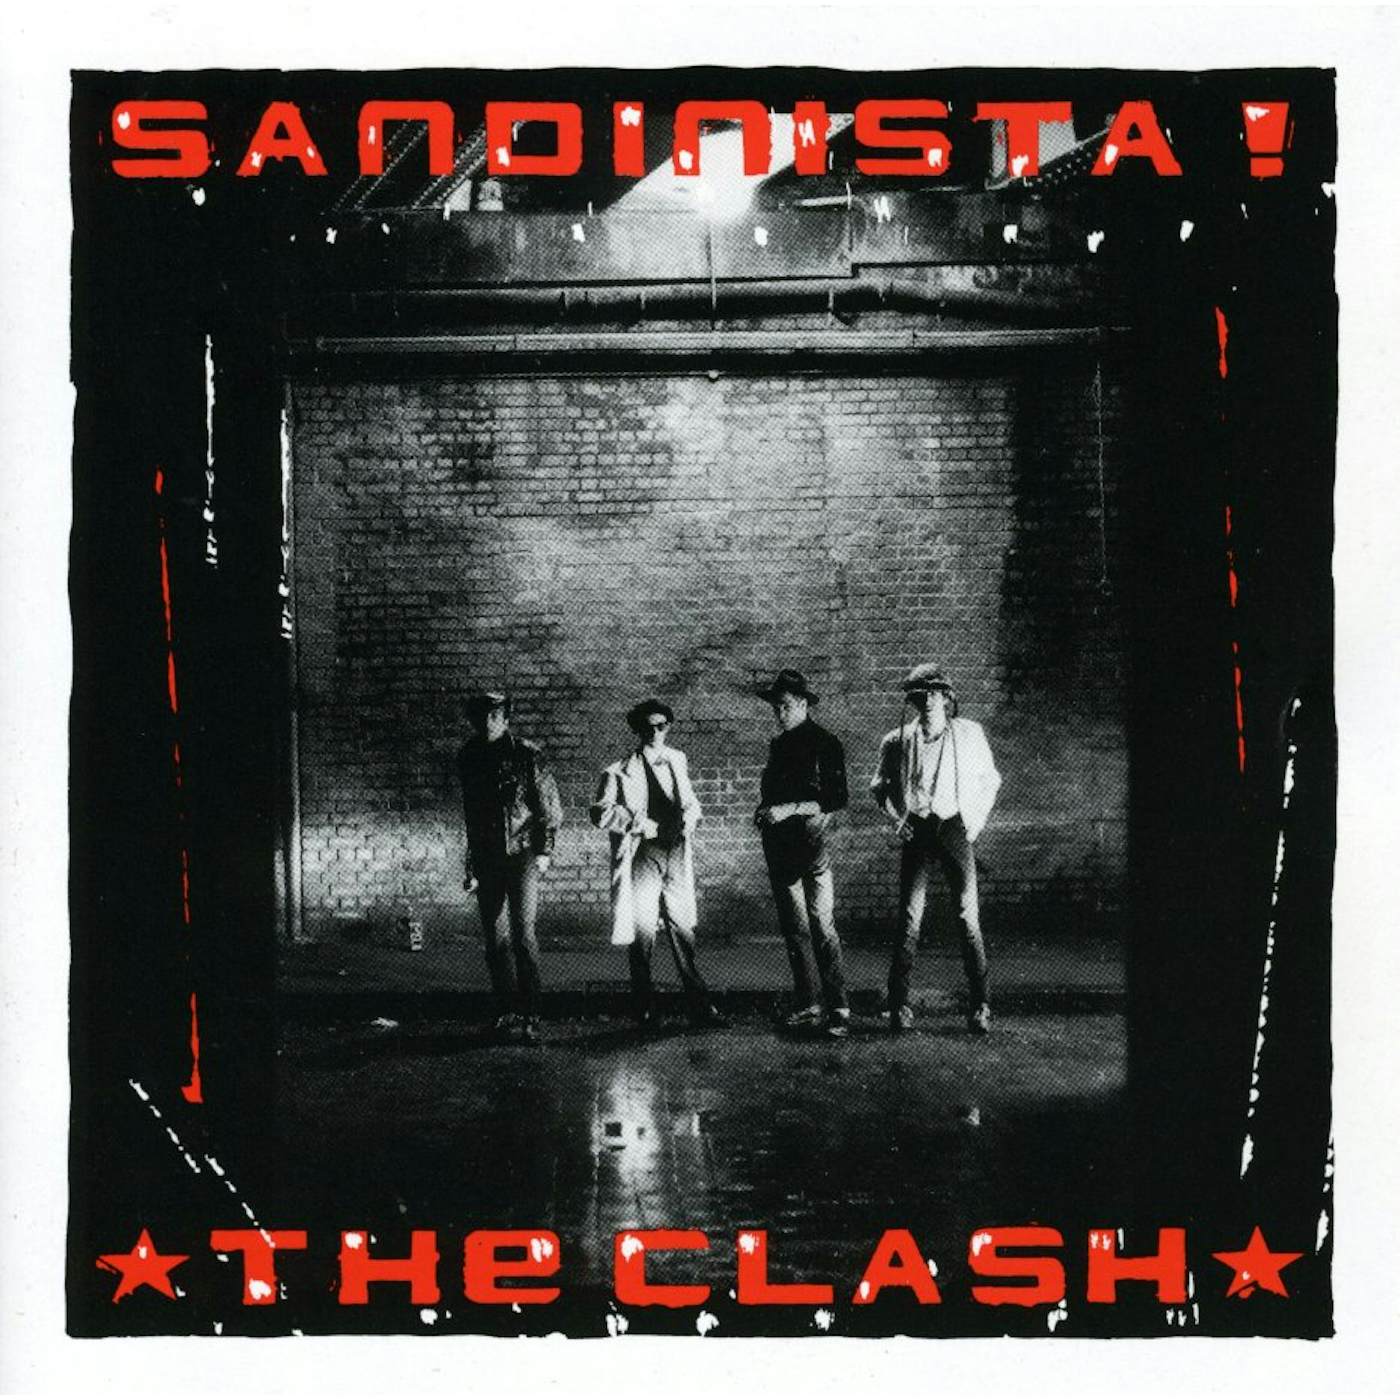 The Clash SANDINISTA CD